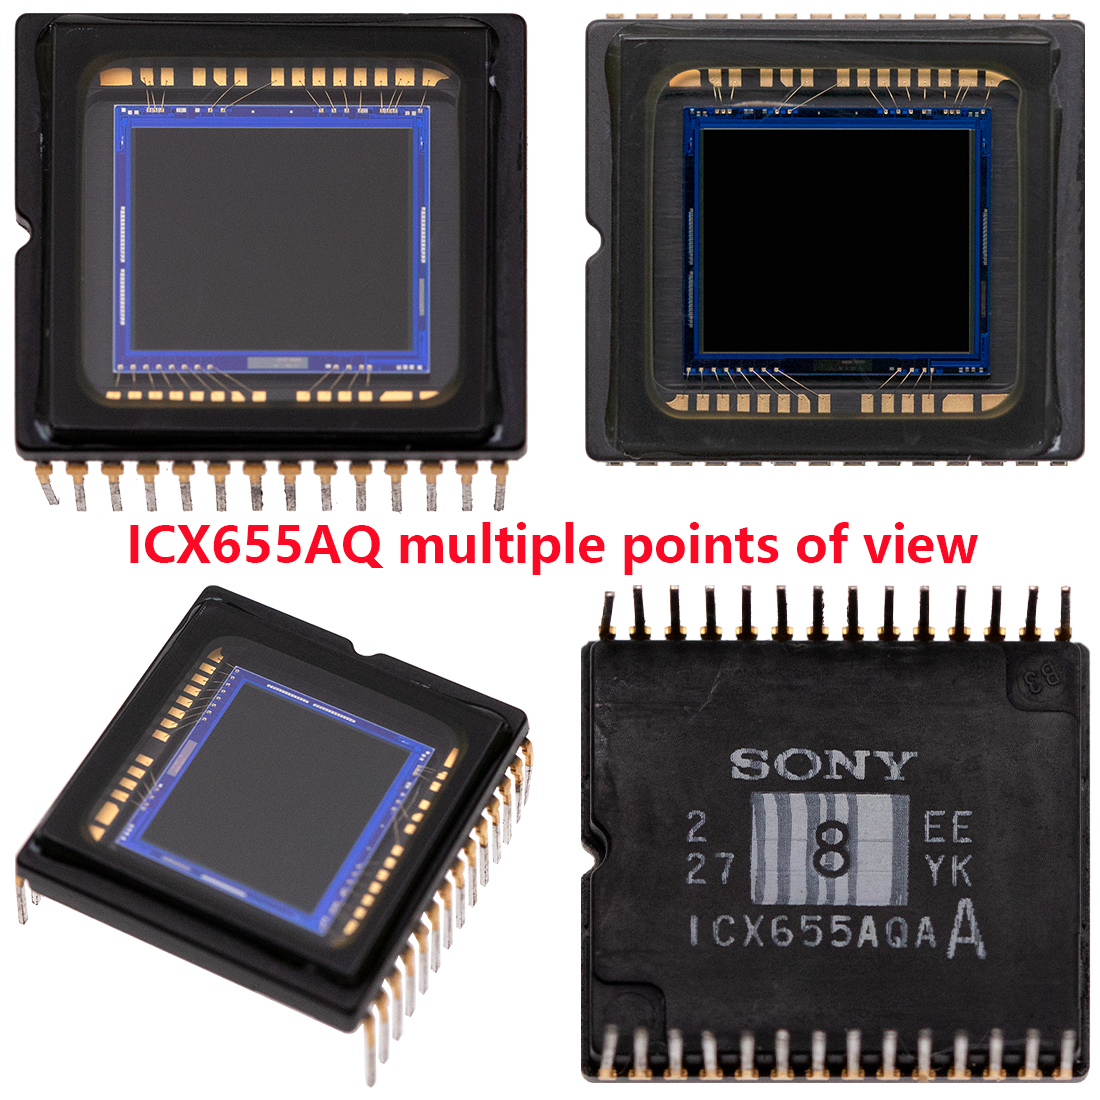 ICX655AQ, 5MP CCD SENSOR, SONY 5百万像素图像传感器，2/3 inch索尼SONY超大像素点CCD SENSOR, FOR industrial camera,工业相机图像传感器